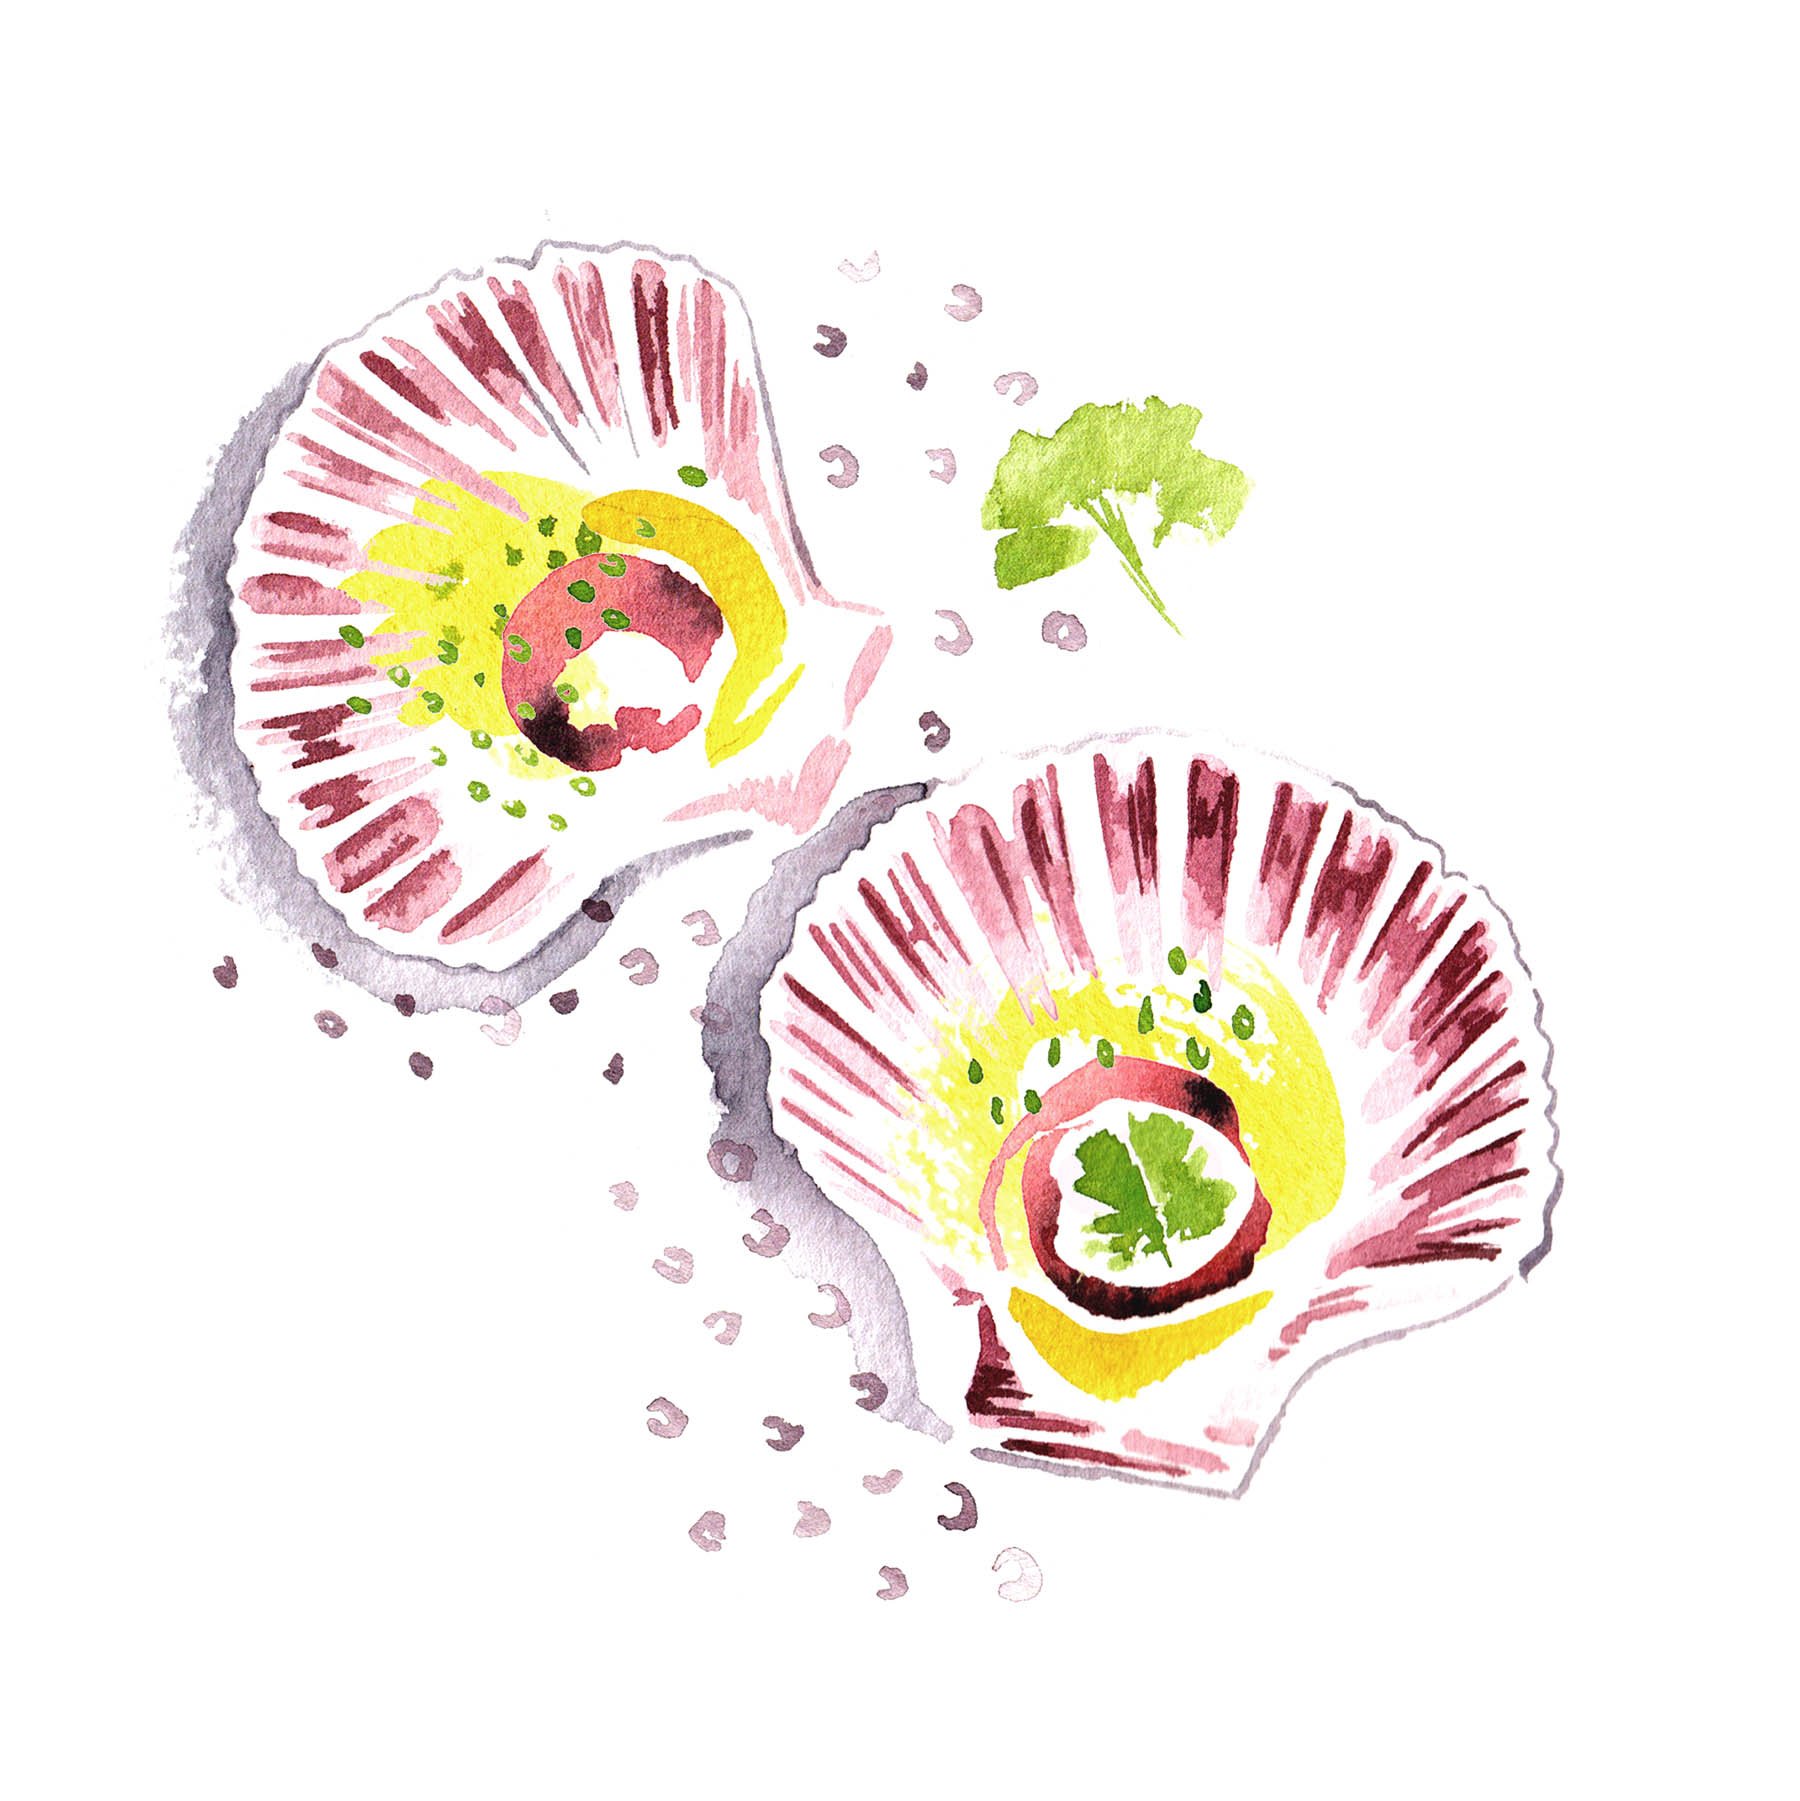 watercolour seafood food illustration menu Tamarind by illustrator Willa Gebbie